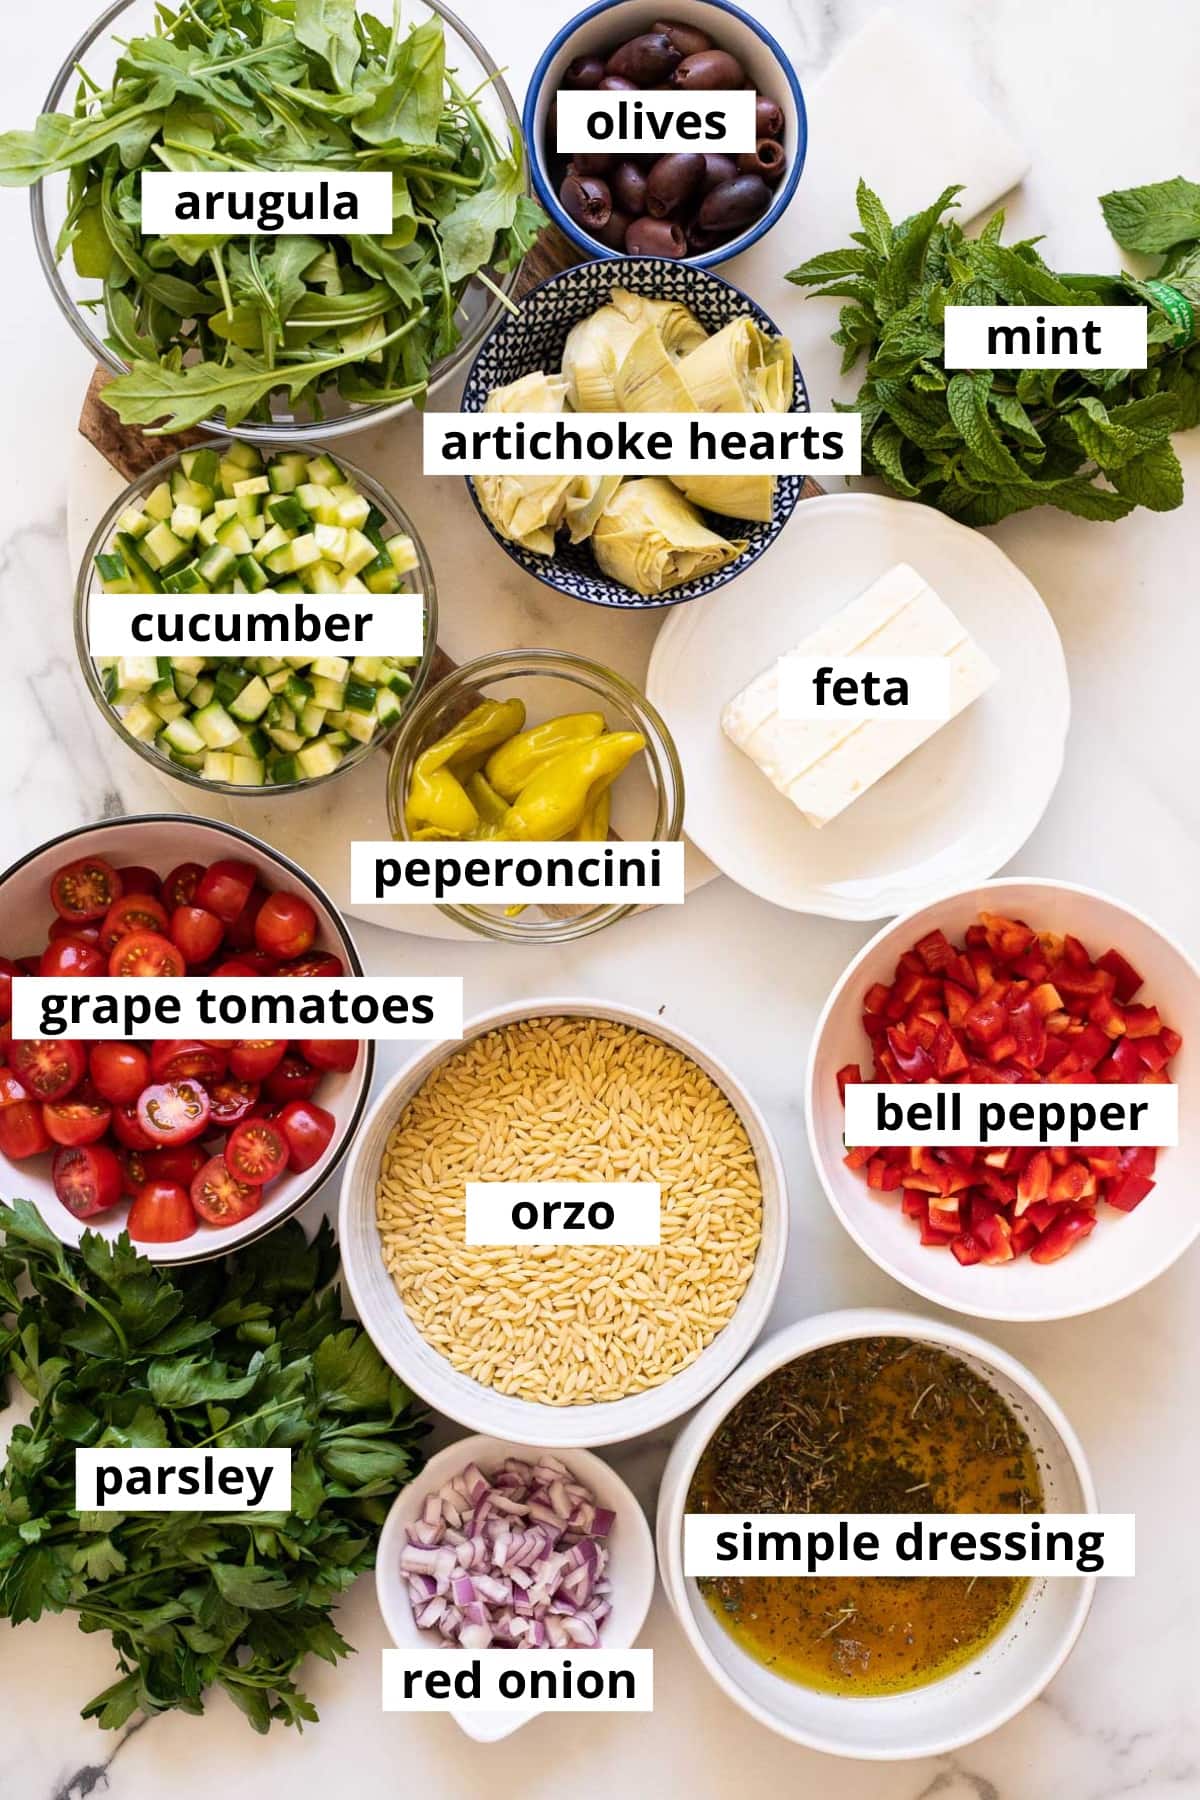 Arugula, artichoke hearts, olives, mint, cucumber, feta, peperoncini, grape tomatoes, orzo, bell pepper, parsley, red onion and salad dressing.